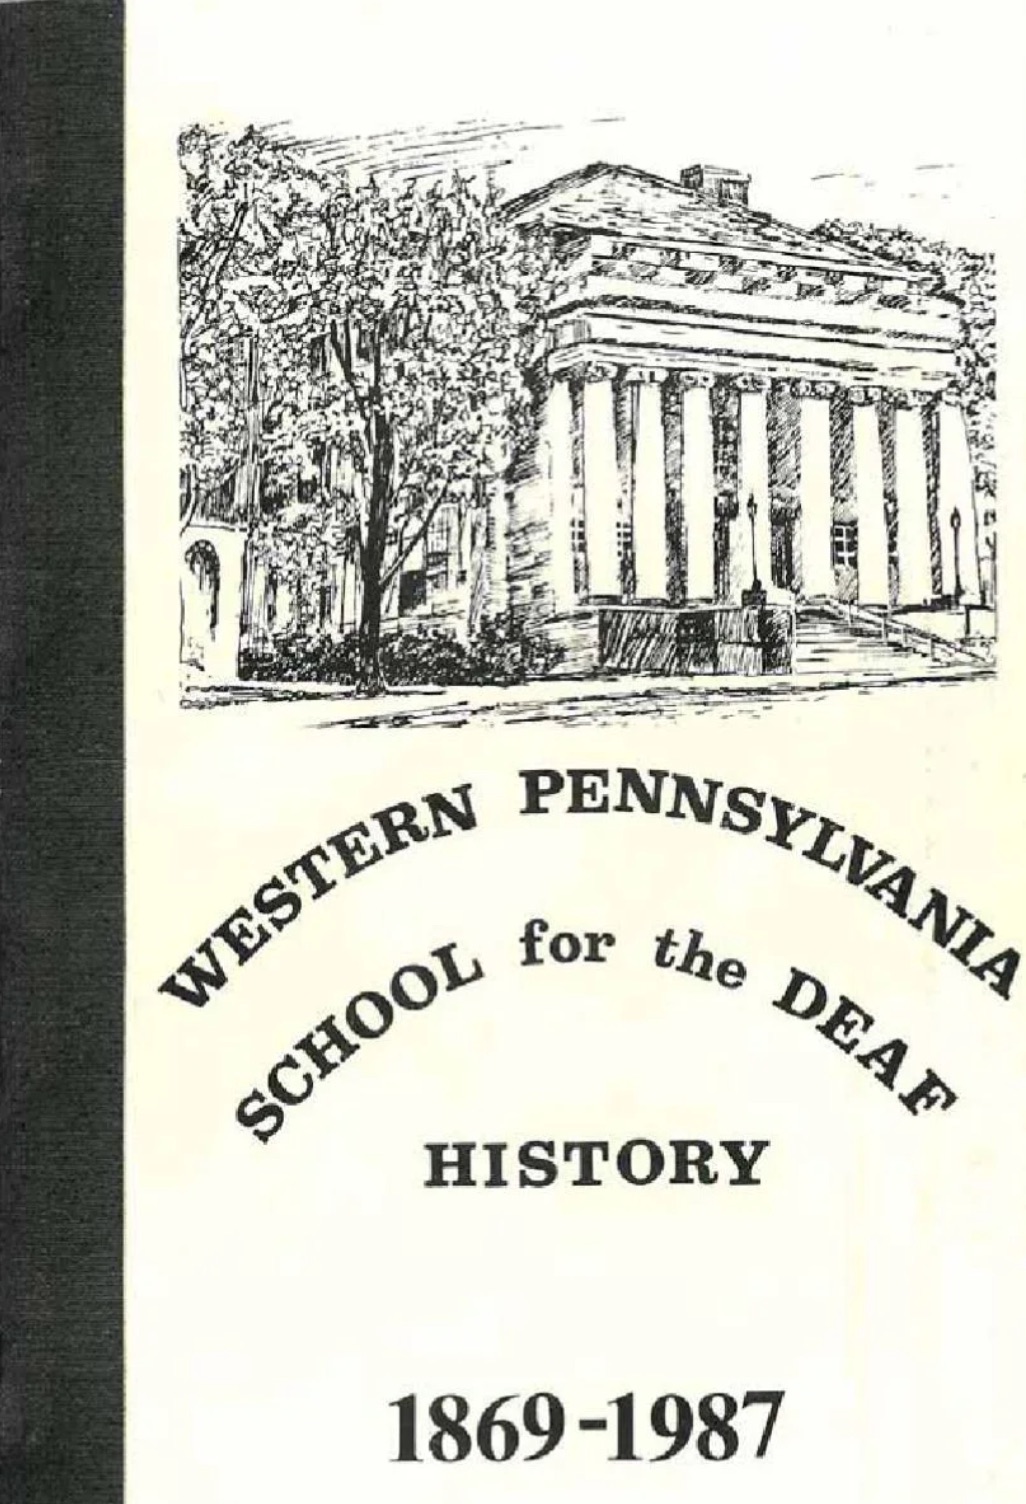 WPSD History book: 1869-1987